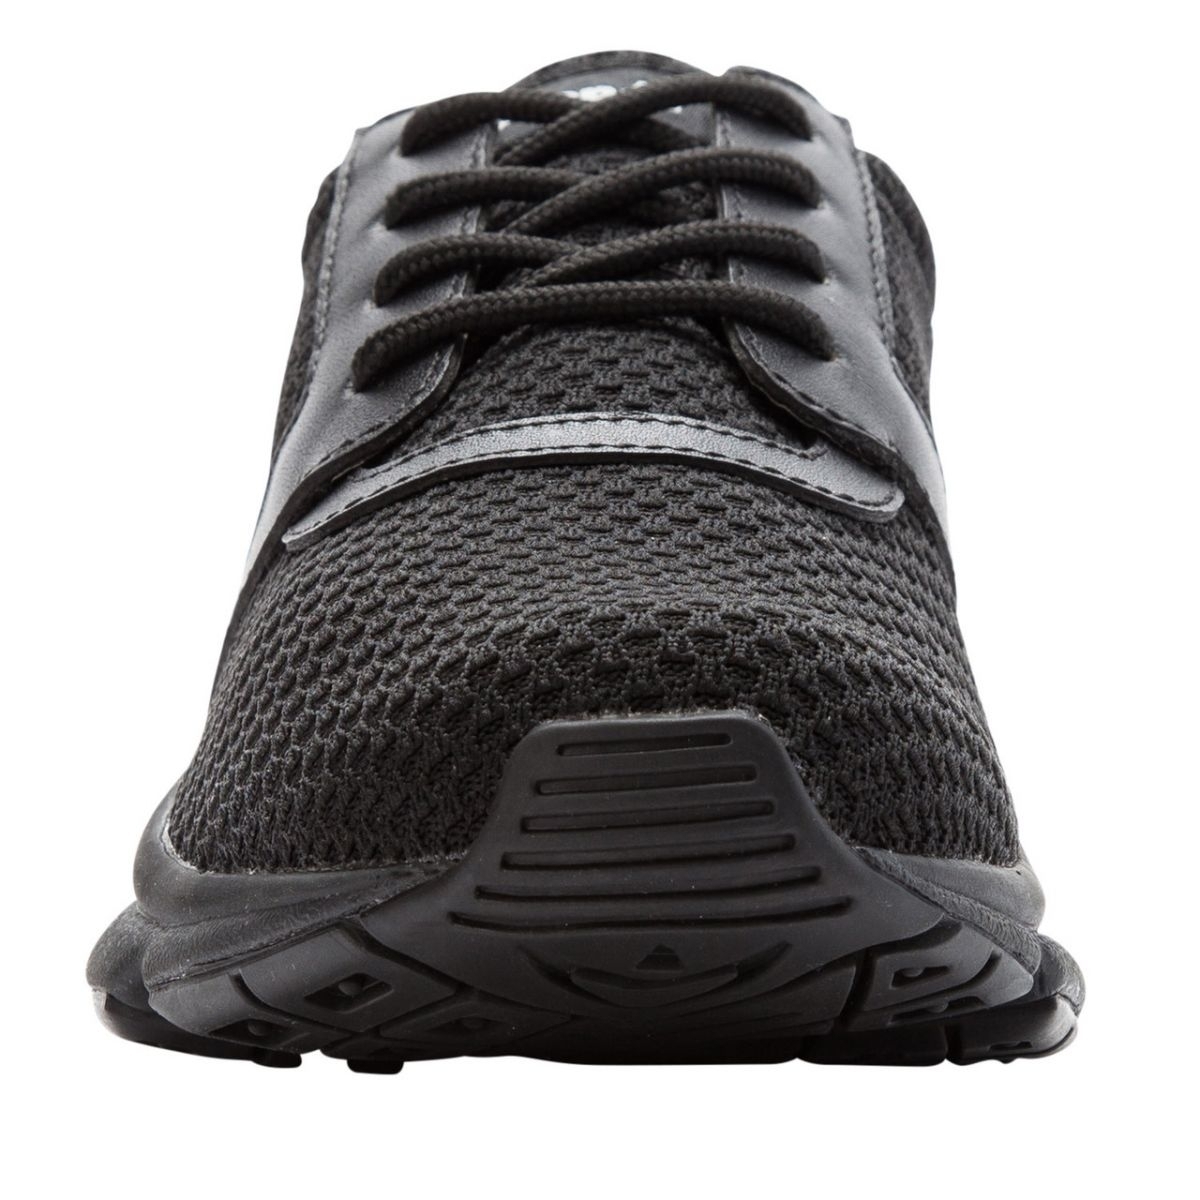 Propet Women's Stability X Walking Shoe Black - WAA032MBLK BLACK - BLACK, 8 Narrow